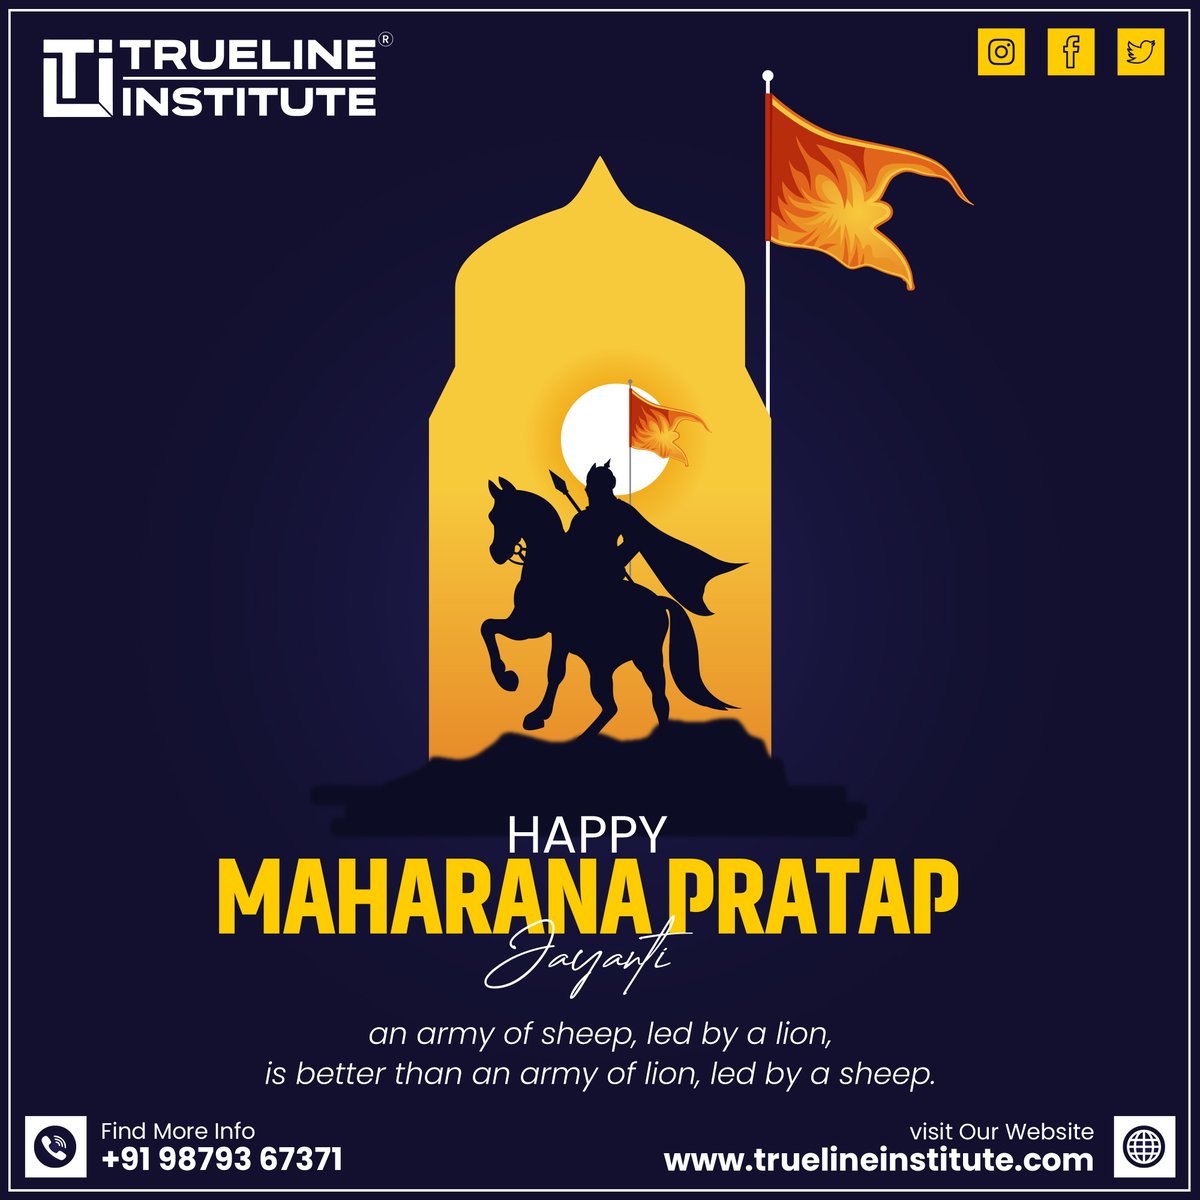 📢 Happy Maharana Pratap Jayanti | Trueline Institute
☎️ +91 98793 67371
🌐truelineinstitute.com
📧truelineinstitute@gmail.com
#truelineinstitute #institute #itcourses #maharanapratapjayanti #pratapjayanti #mewarwarrior #rajputpride #courageousleader #hinduwarrior